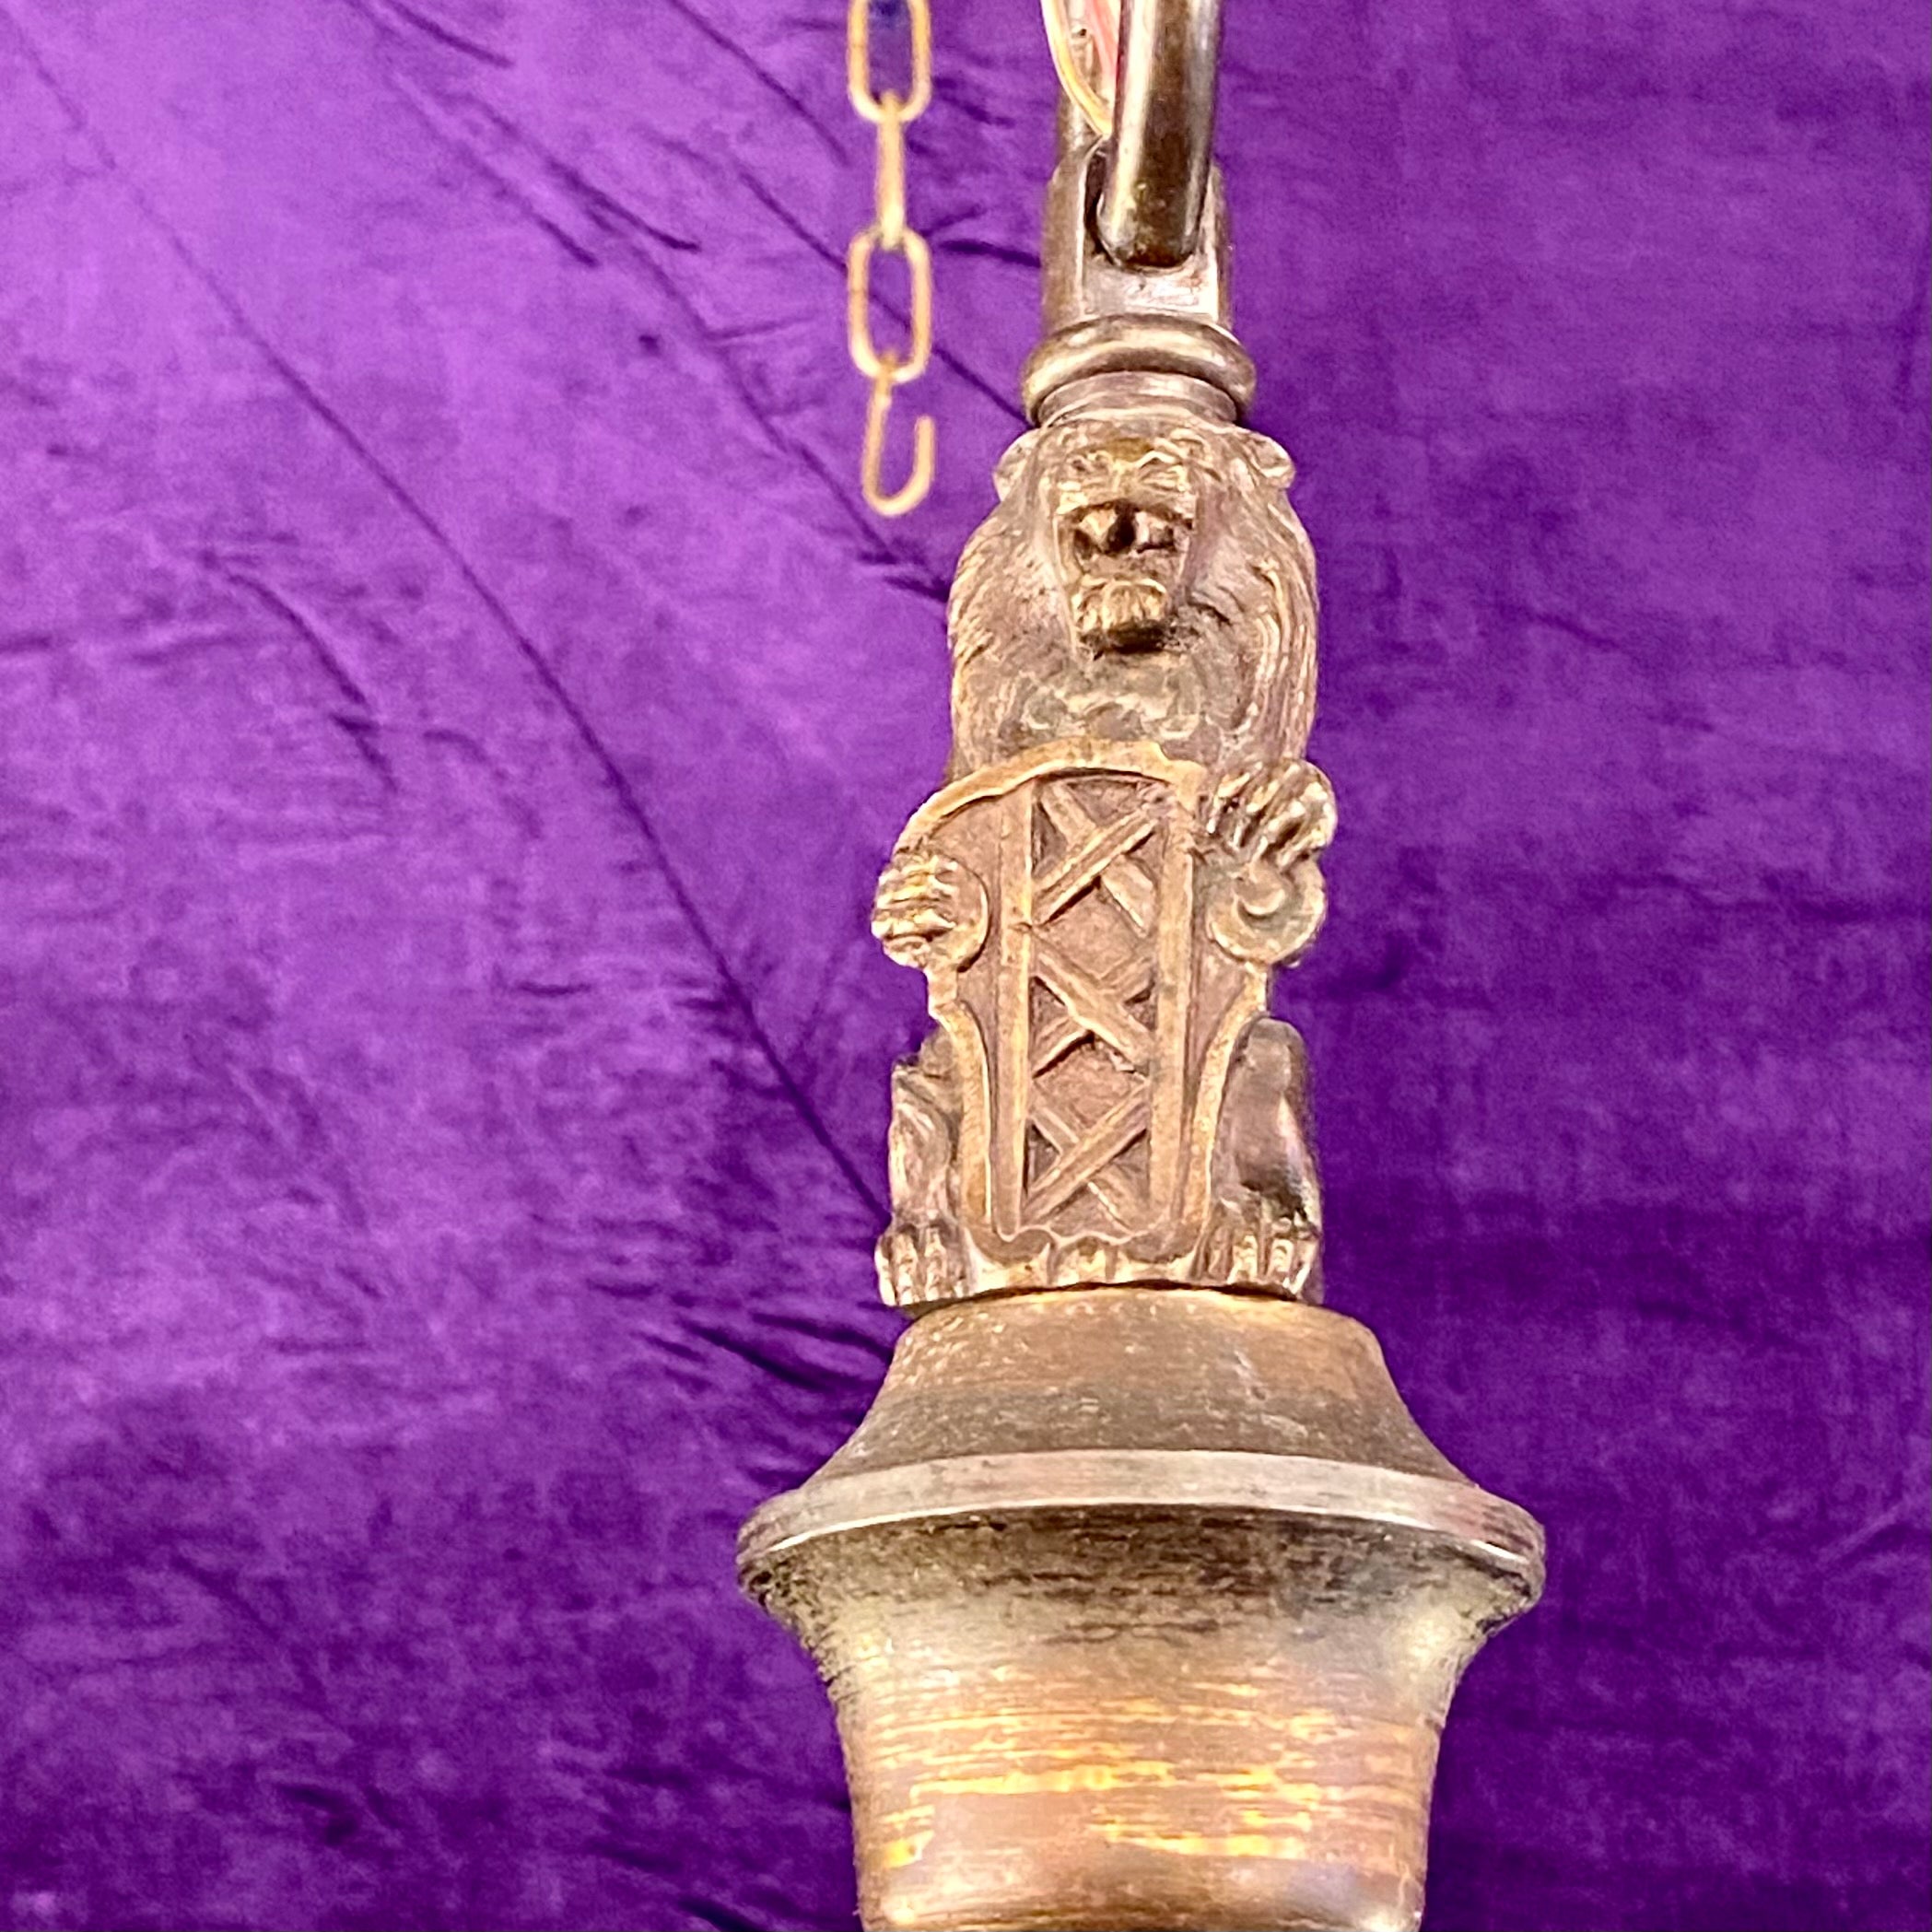 Antique Aged Brass Flemish Chandelier with Lion Detail